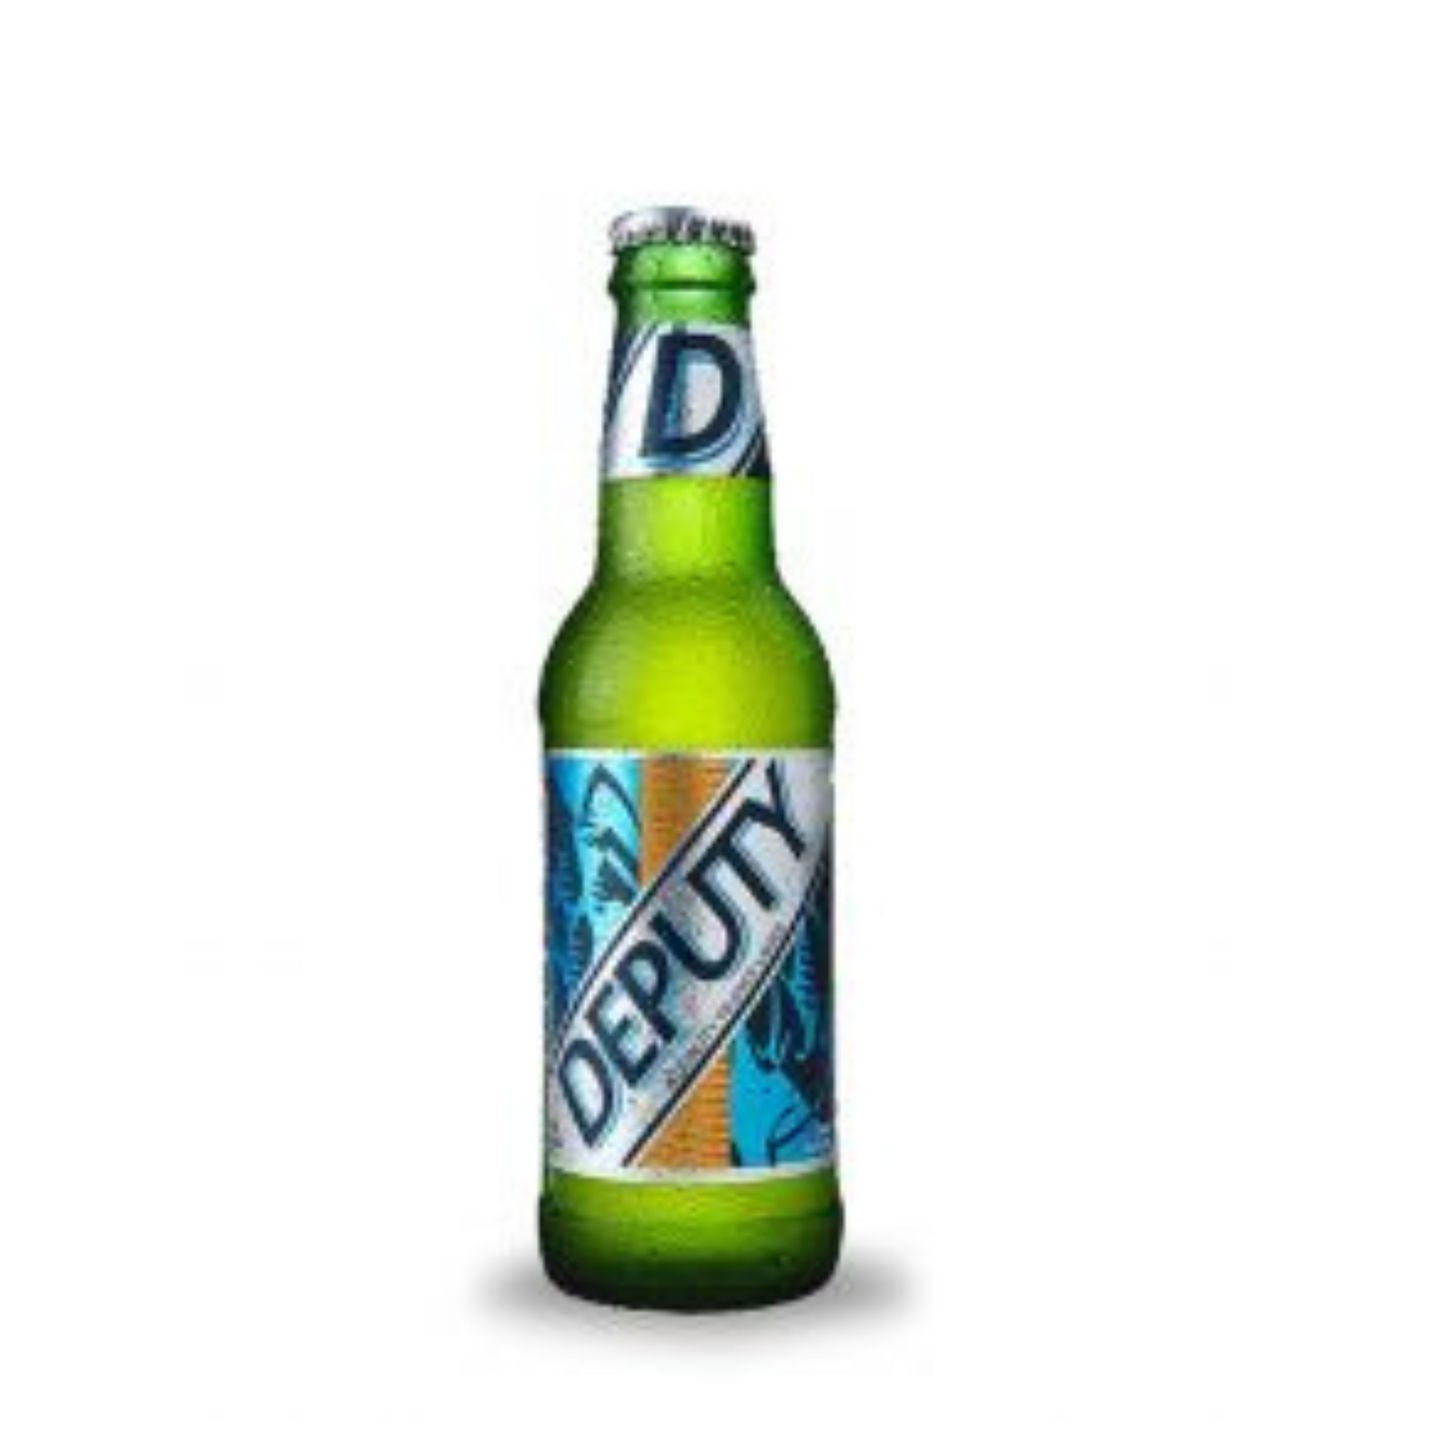 Deputy Beer - Bottle - 275ml (Case of 24) (Bulk)